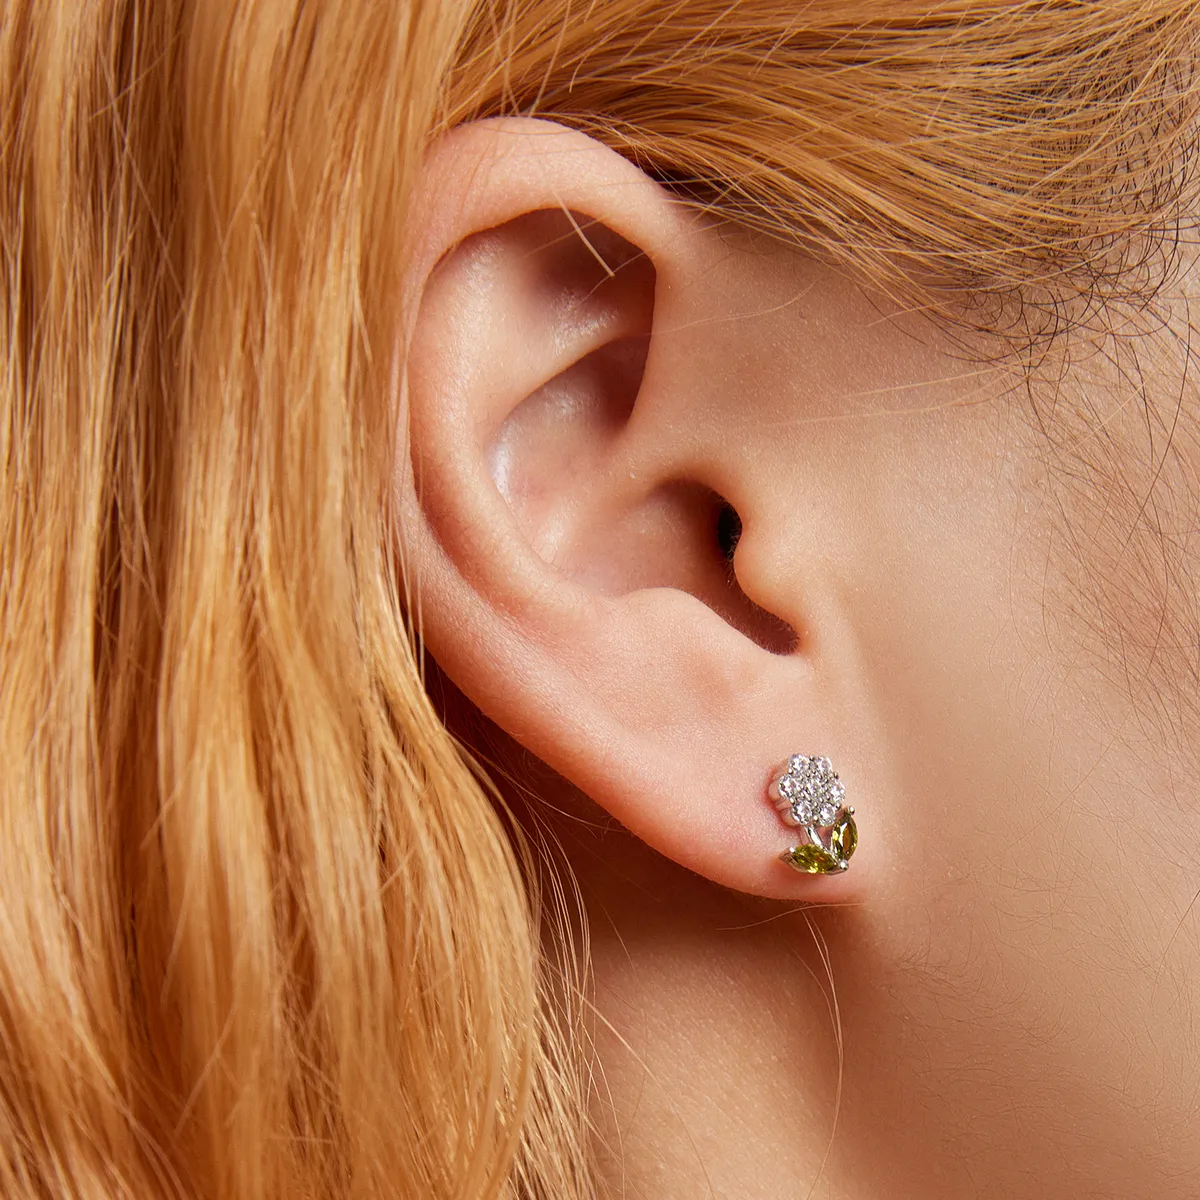 Pandora Style Delicate Flowers Stud Earrings - BSE592-WH